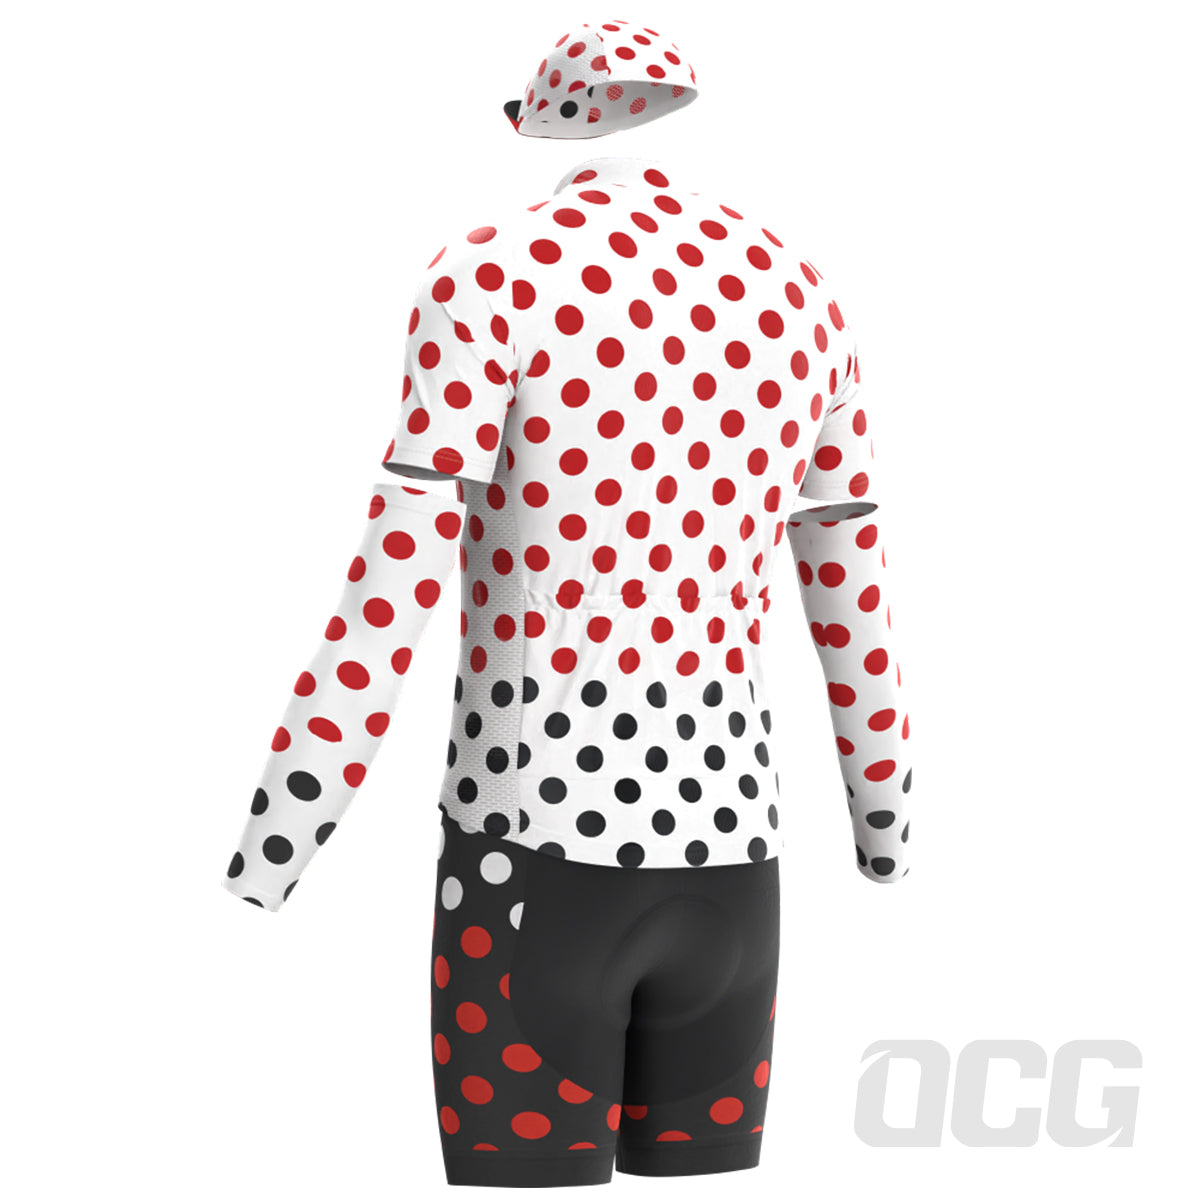 Men's White Polka Dot Short Sleeve Cycling Bundle